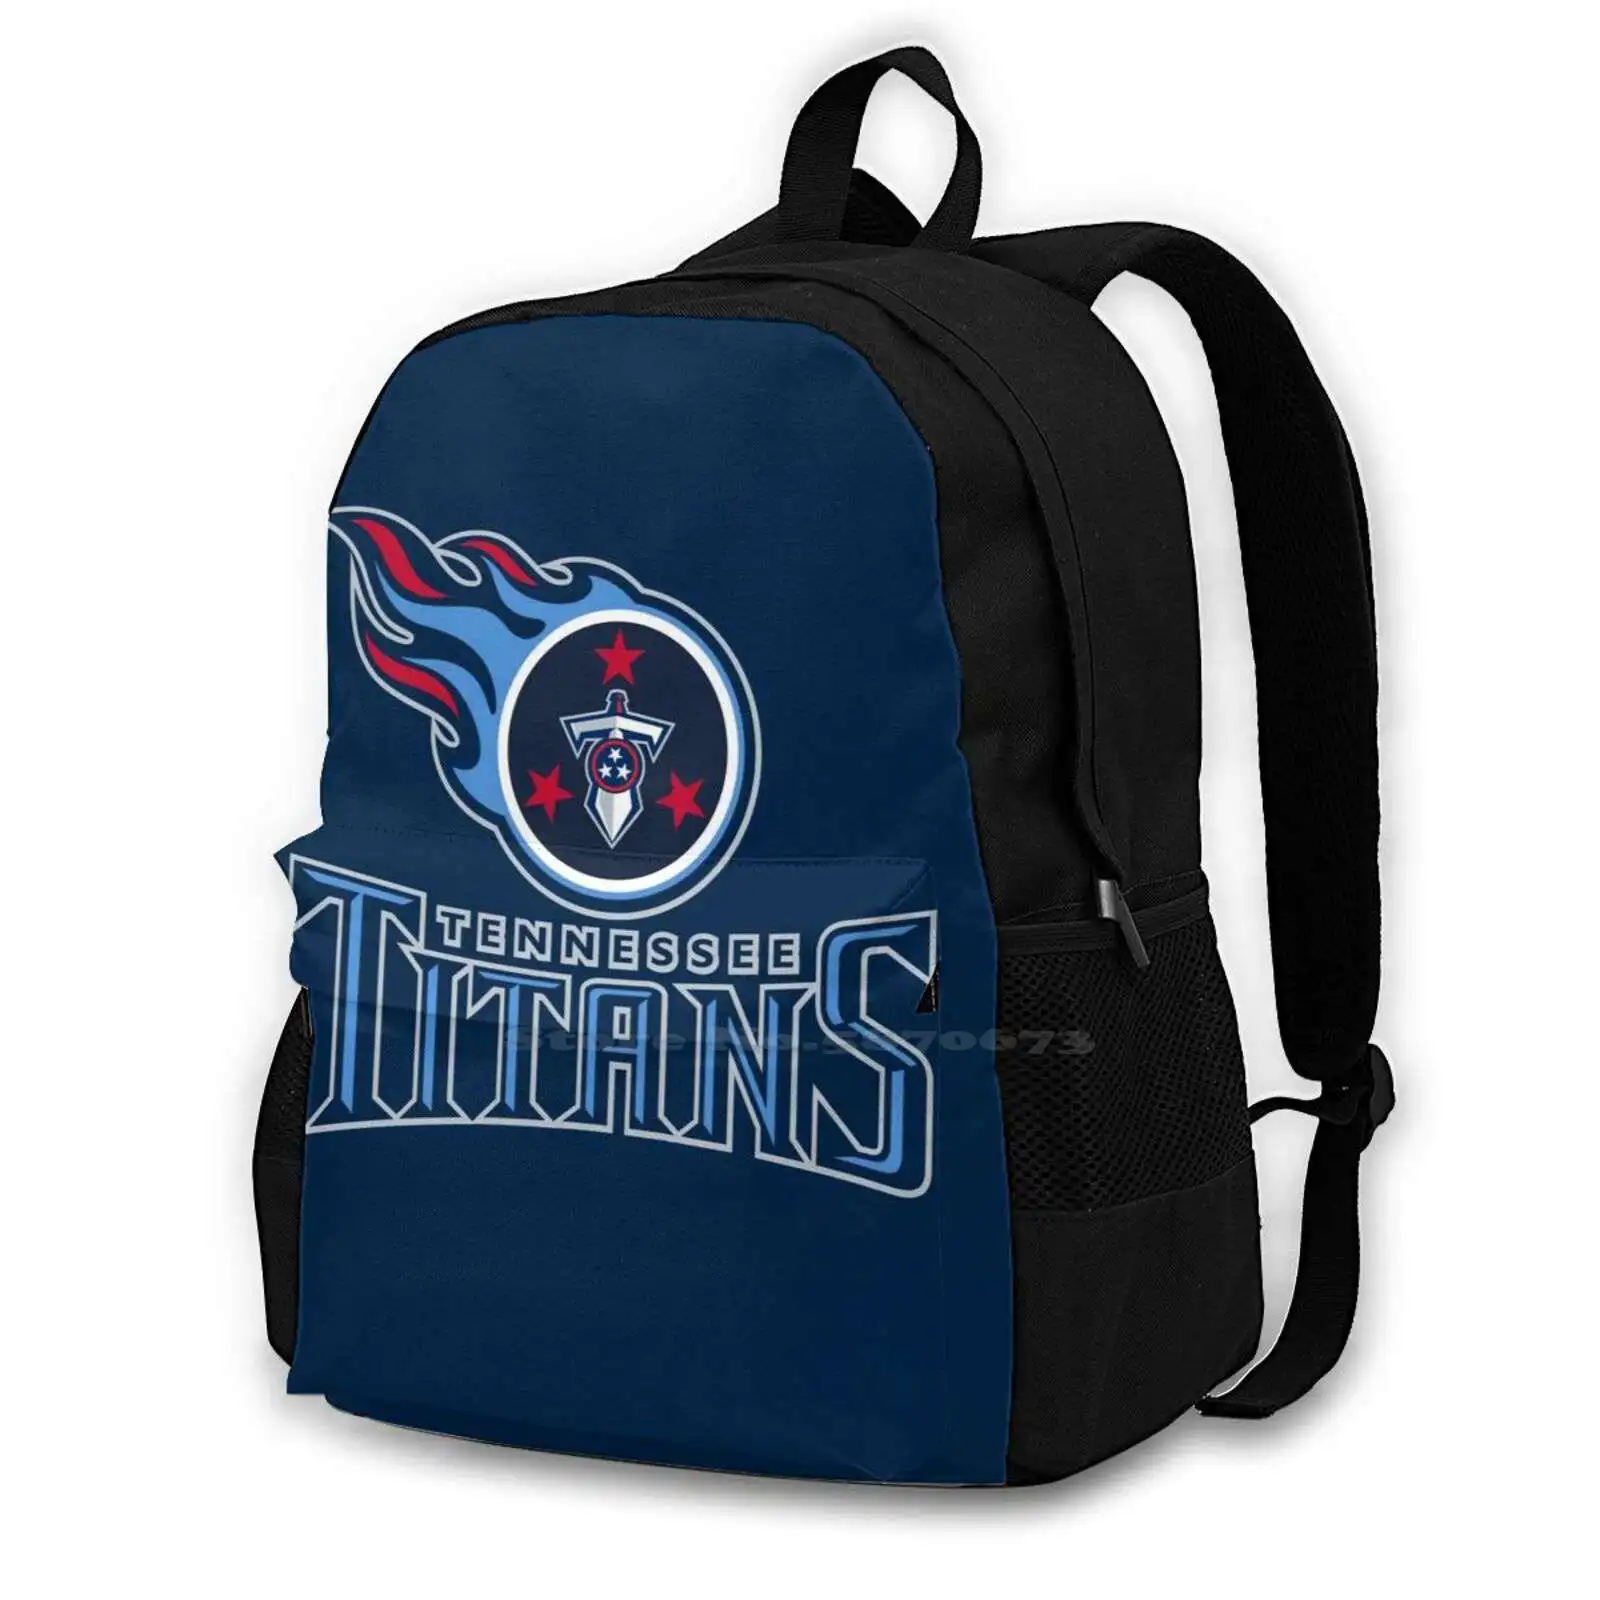 

Sticker-Titans Tennessee Fashion Travel Laptop School Backpack Bag Logo